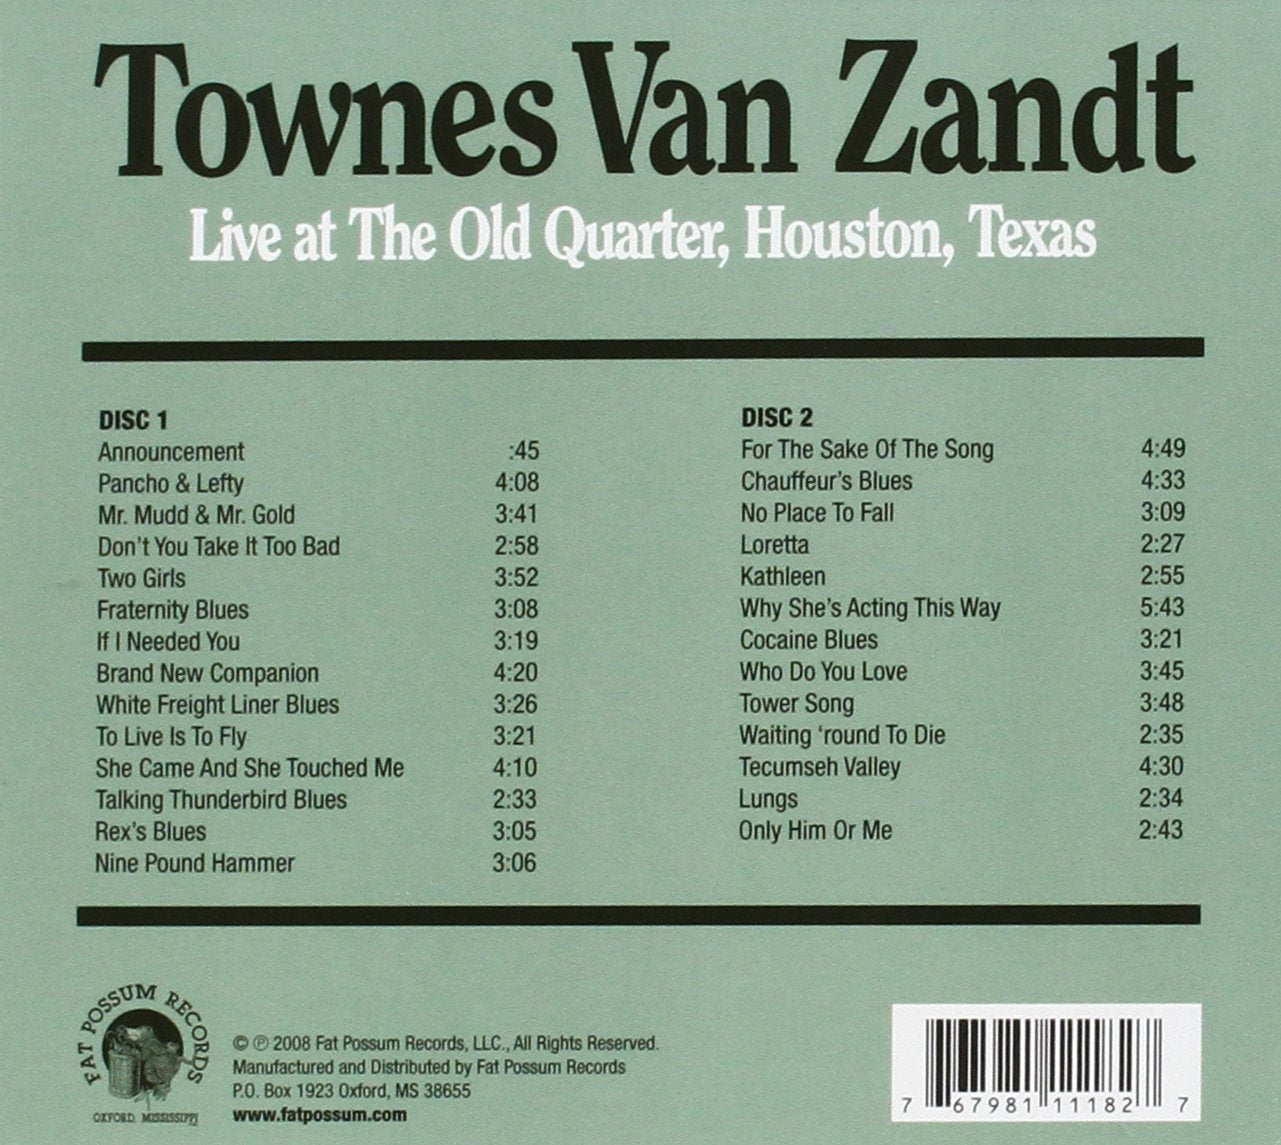 Townes Van Zandt - Live at the Old Quarter, Houston, Texas